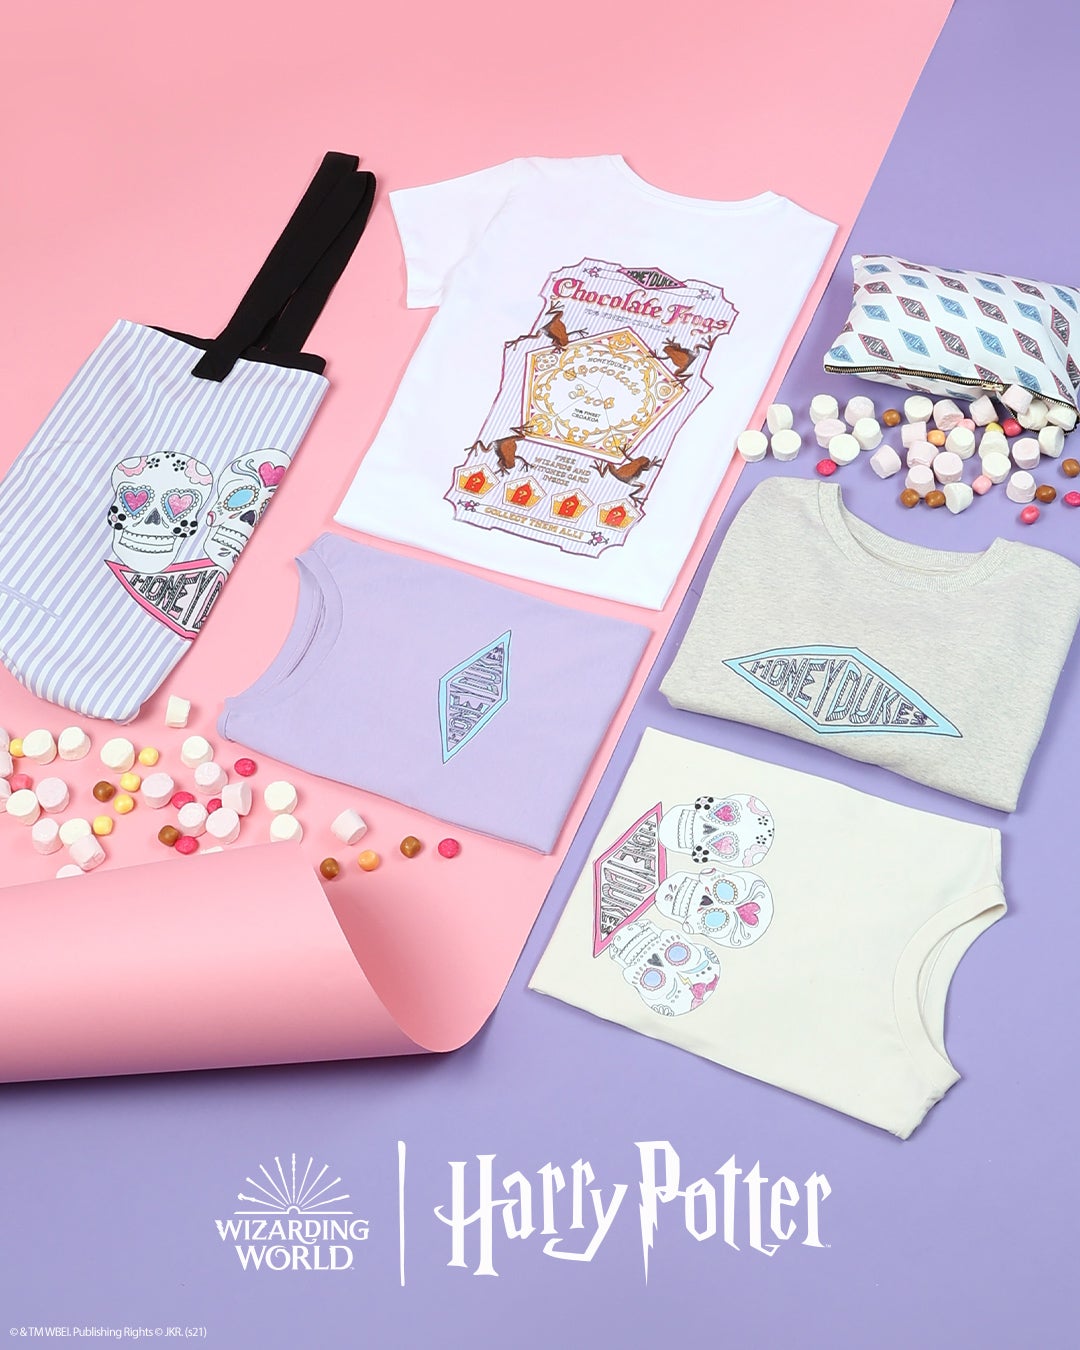 Harry Potter Honeydukes collection new to VeryNeko